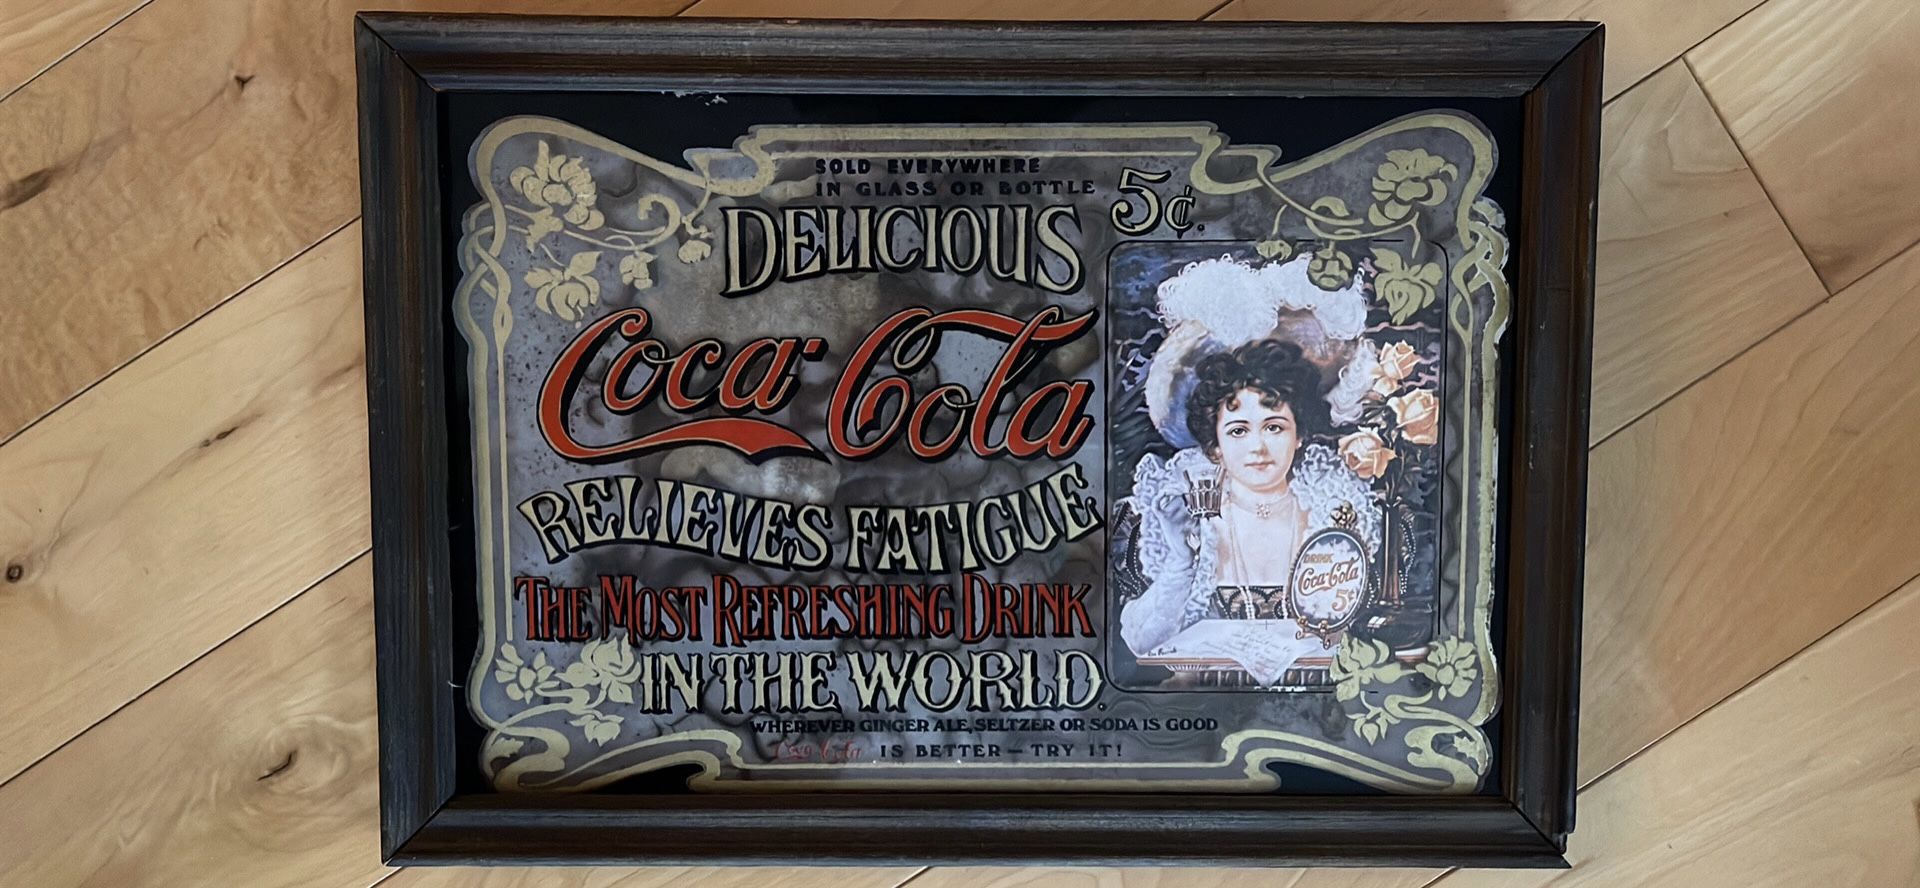 Vintage five cent Coca-Cola mirrored framed beer sign